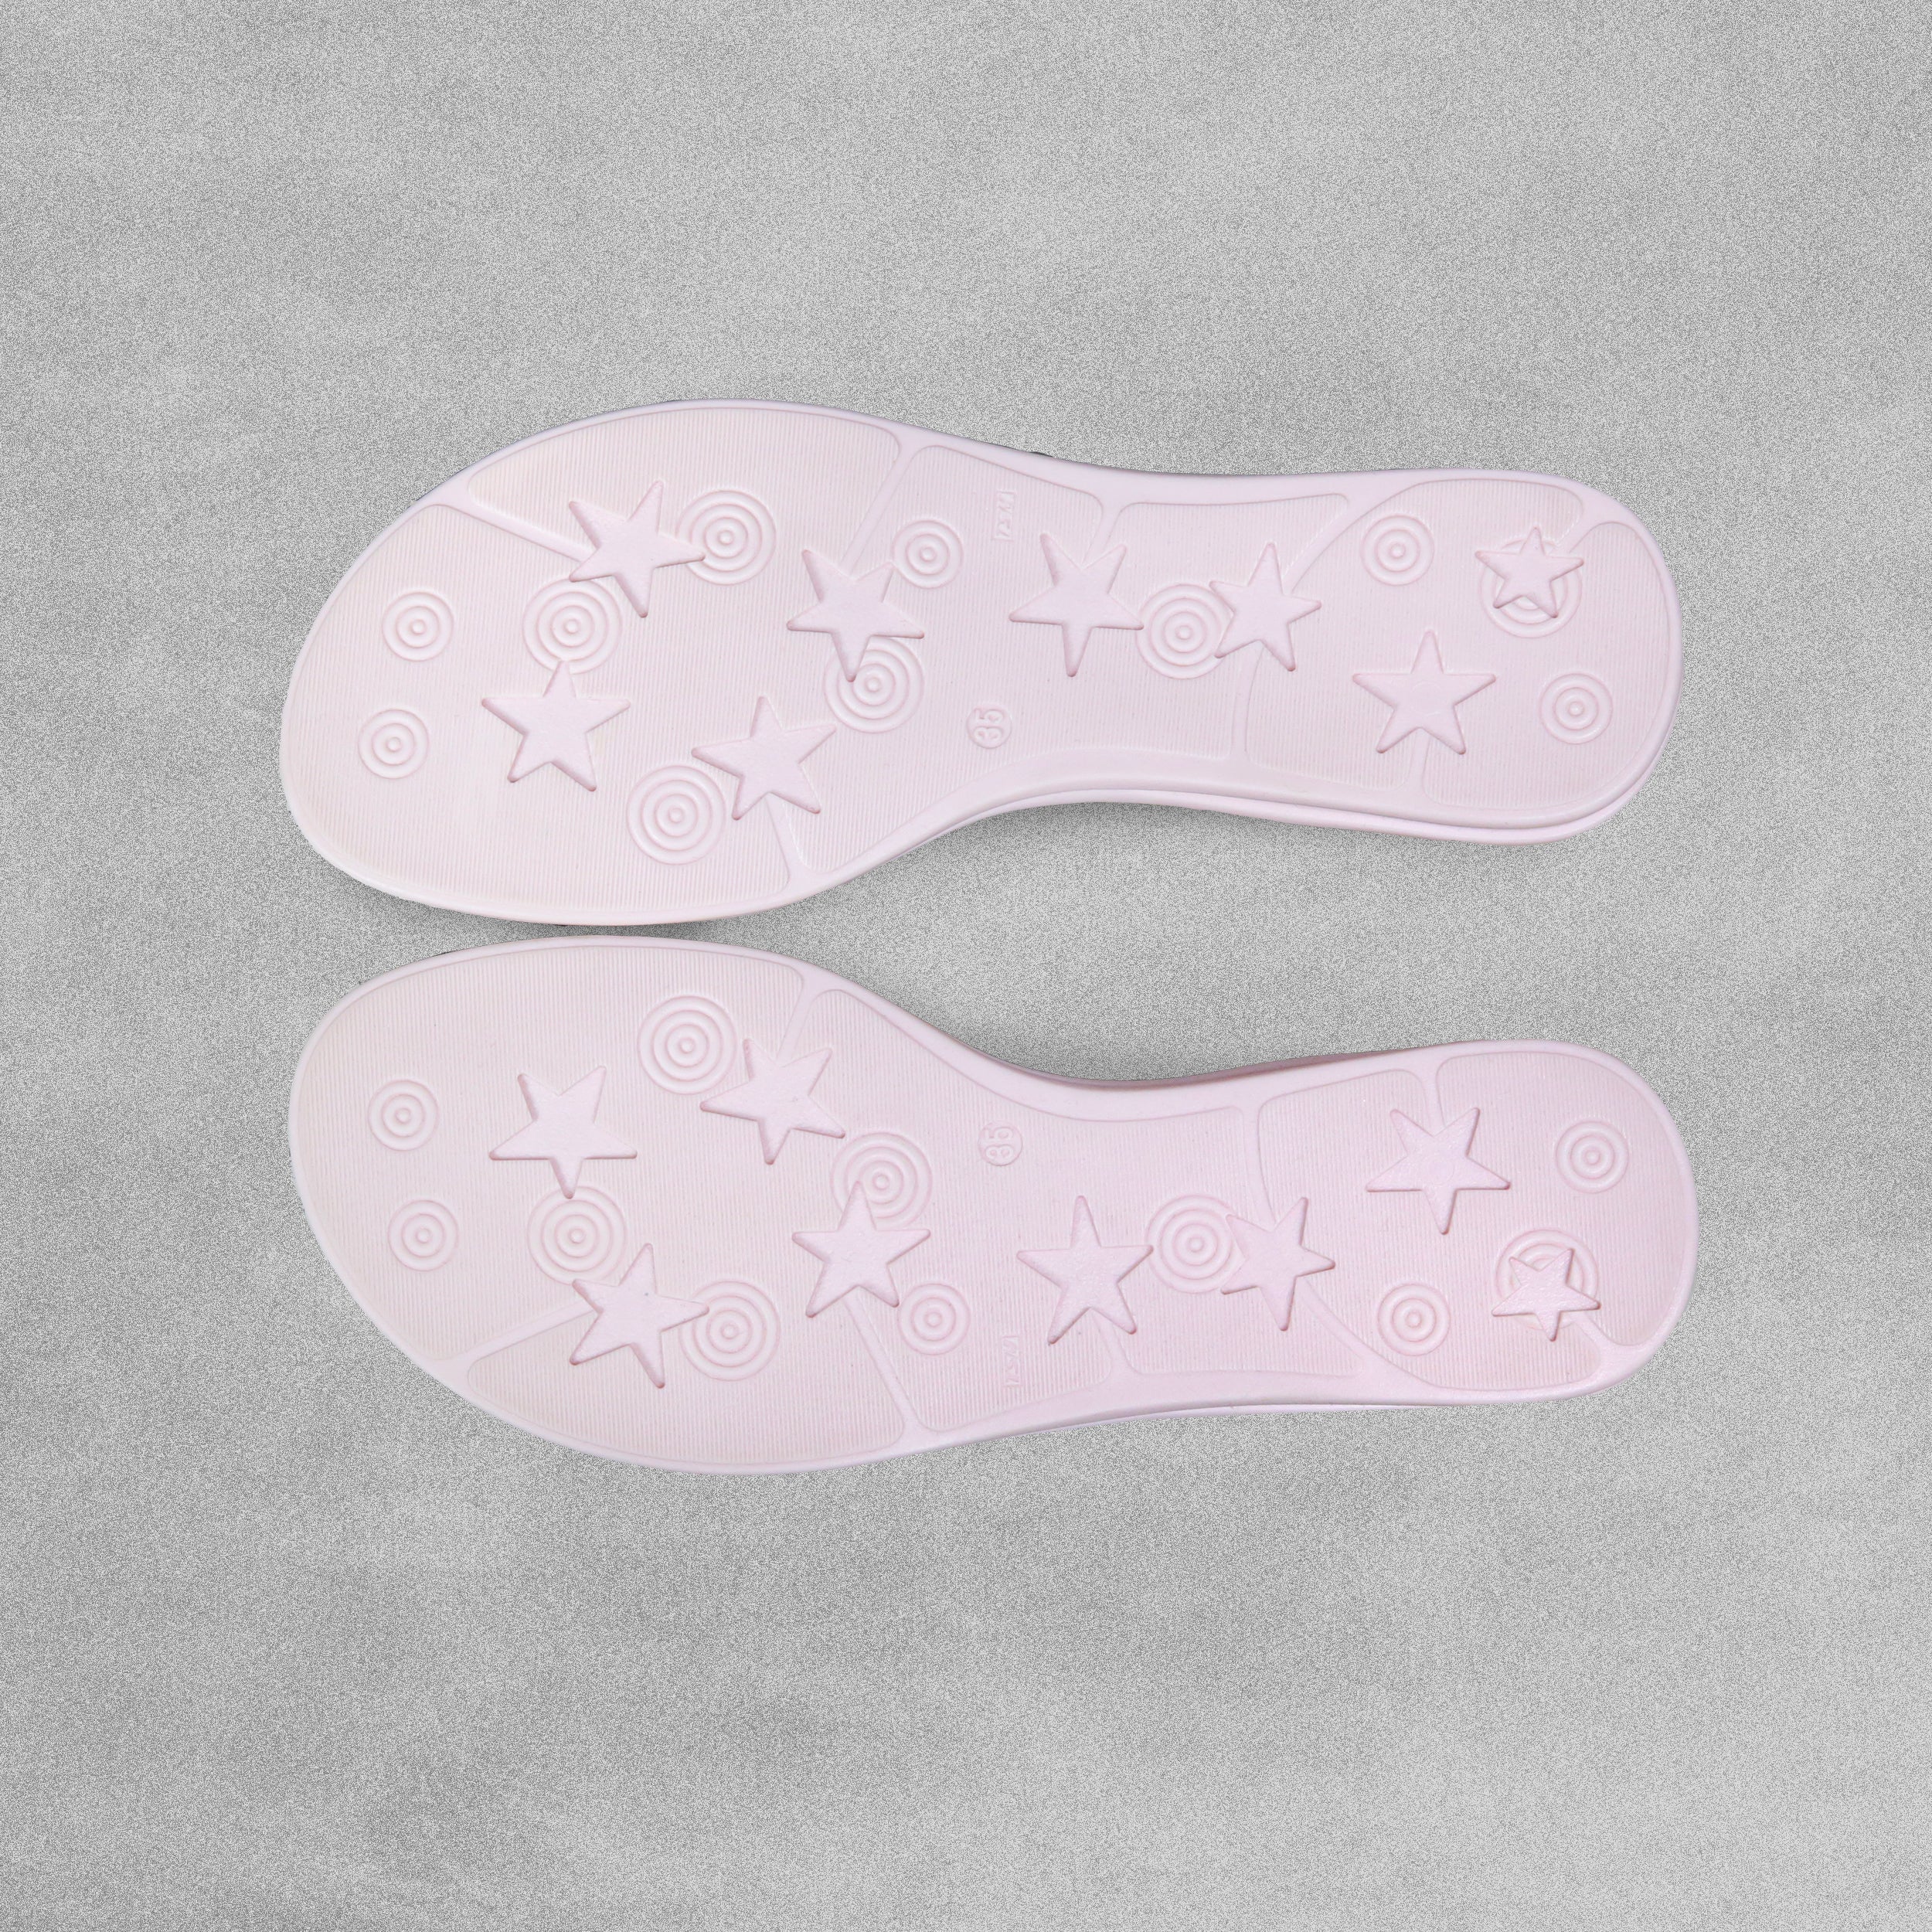 'Primigi' Girls Pale Pink Metallic Sandals with Velcro Strap - UK Size 2.5 / EU 35